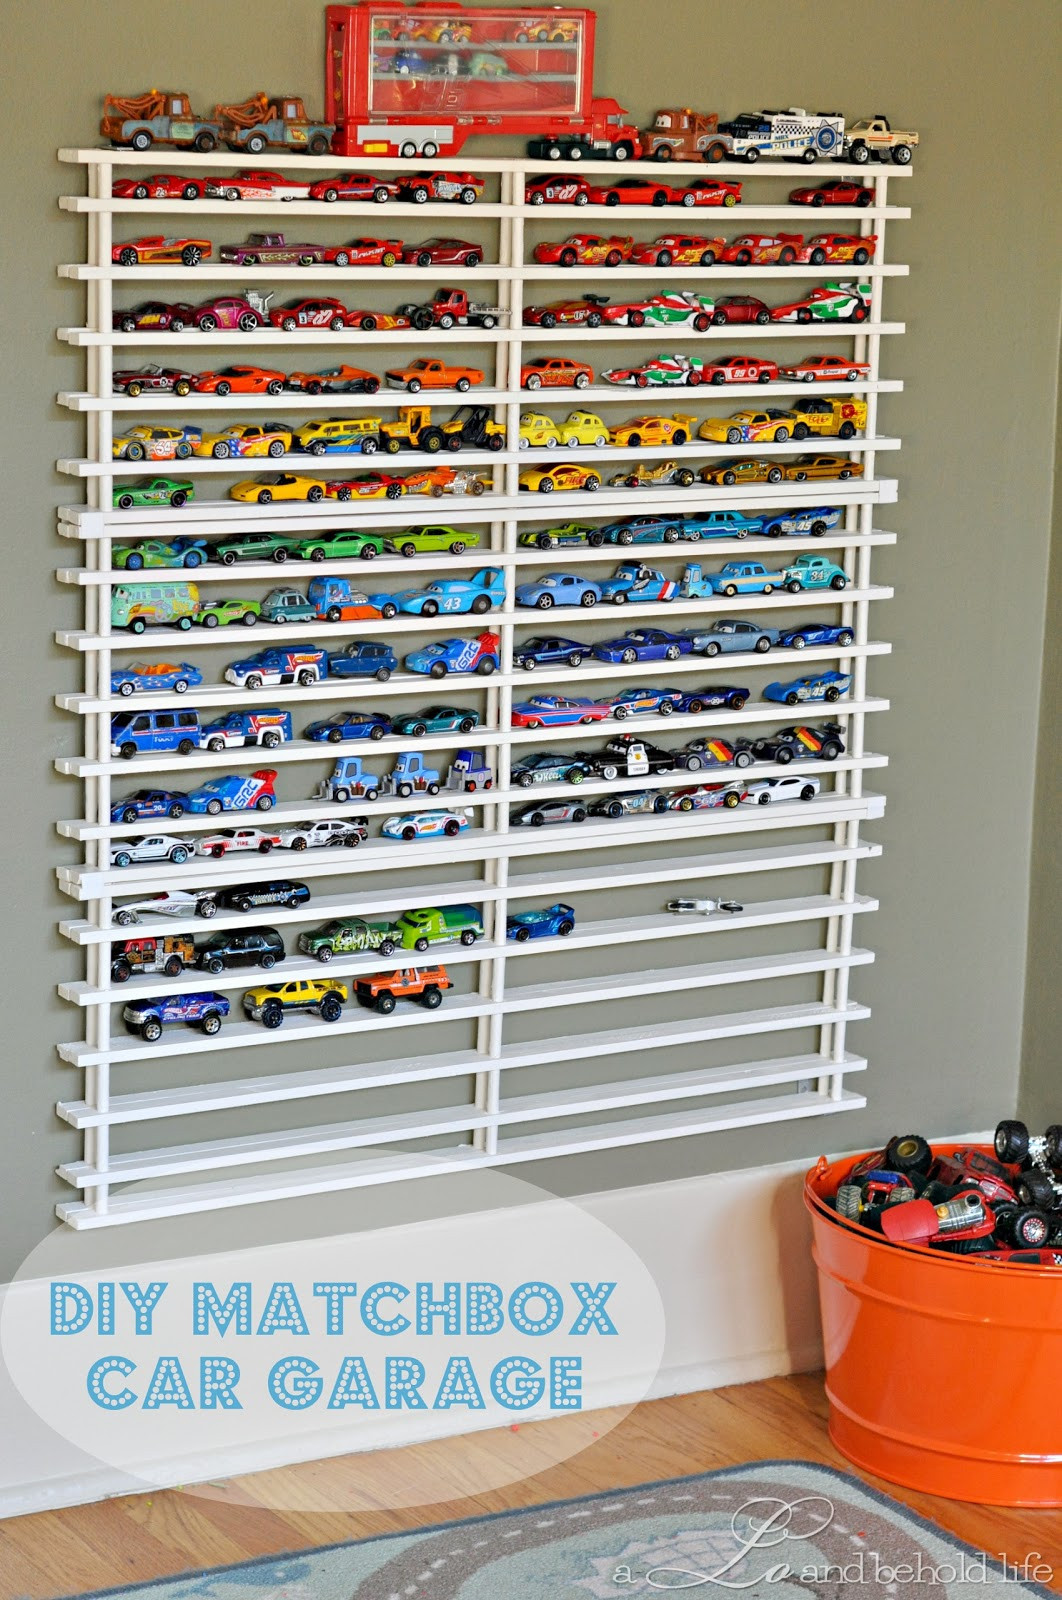 DIY Matchbox Car Storage
 DIY Matchbox Car Garage UPDATED